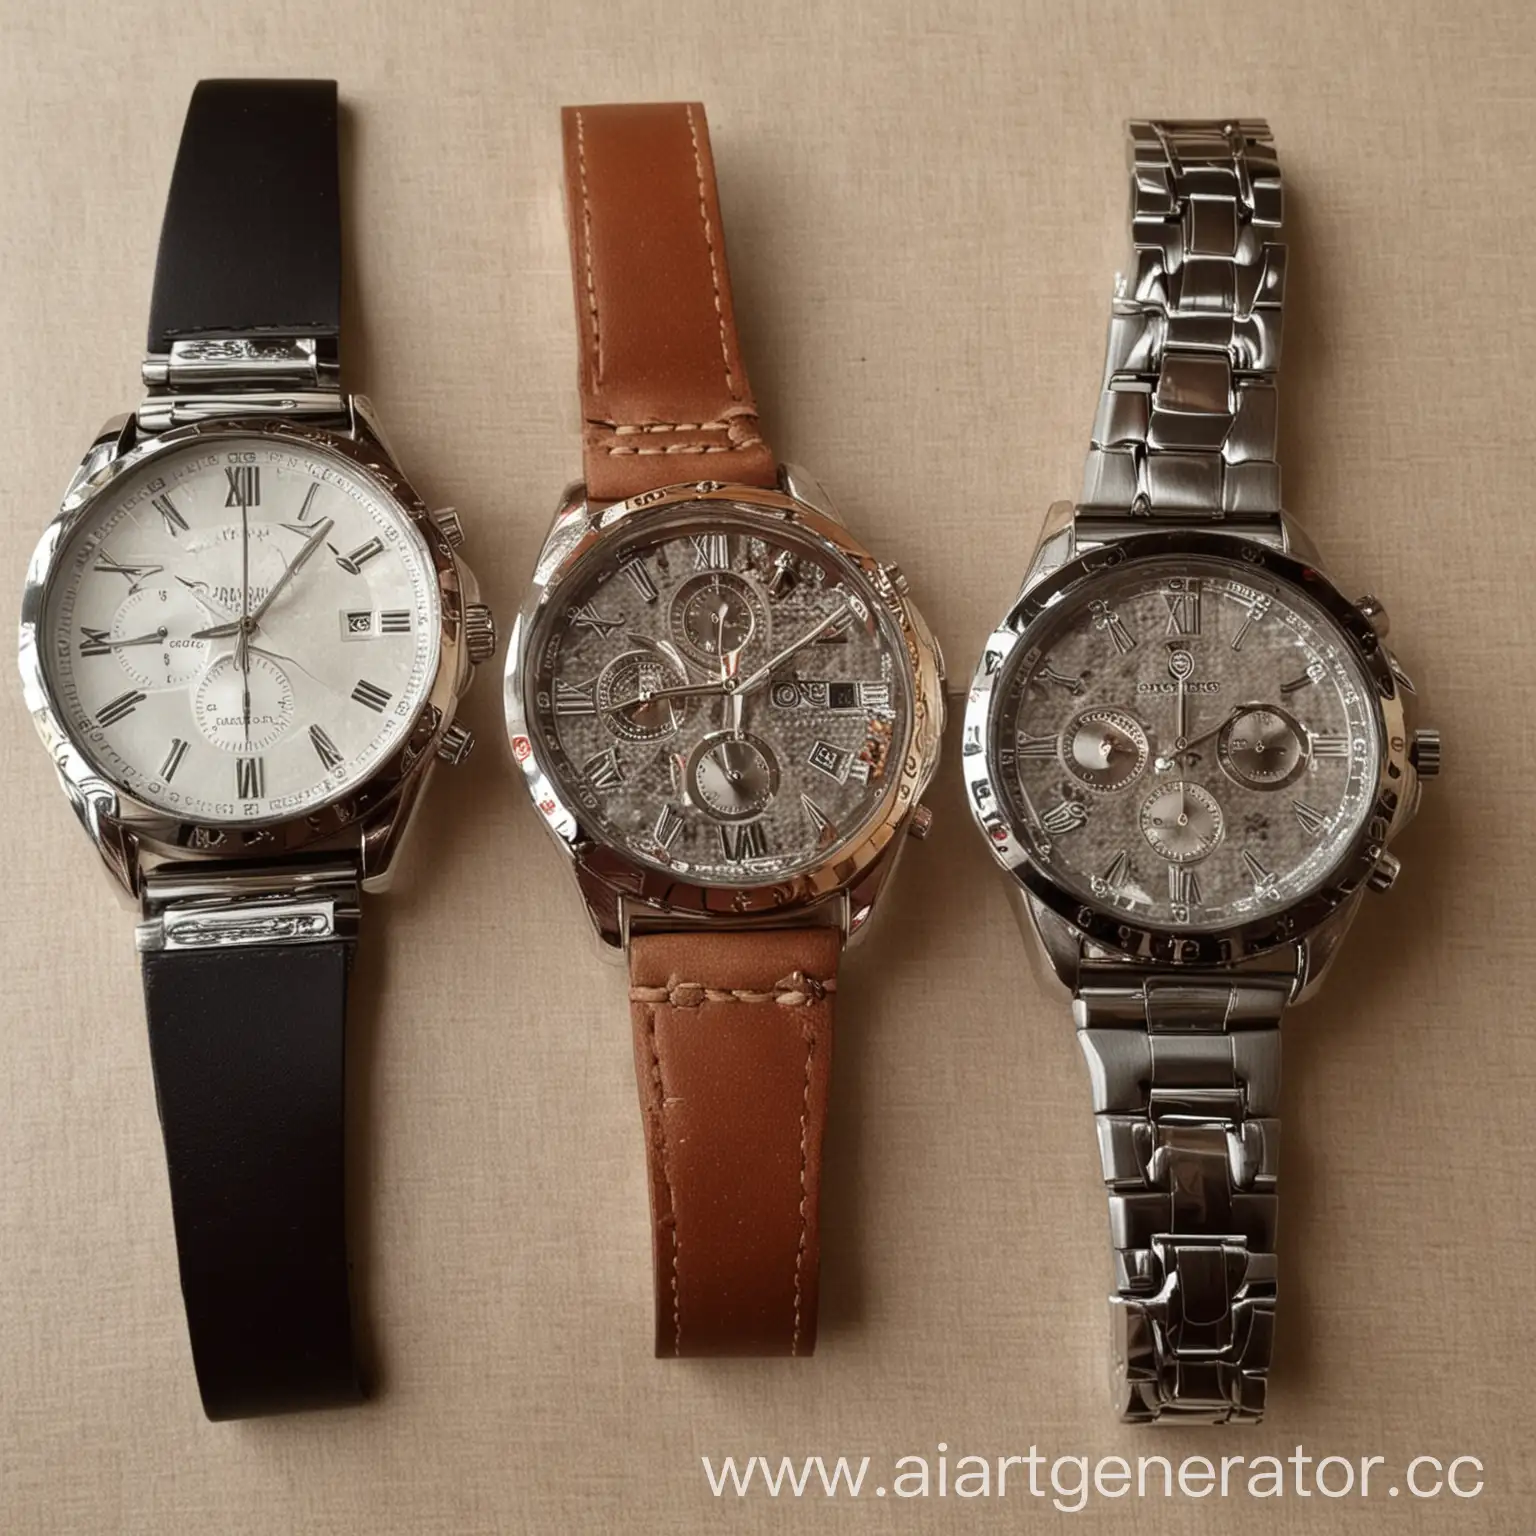 Luxury-Wrist-Watches-on-Display